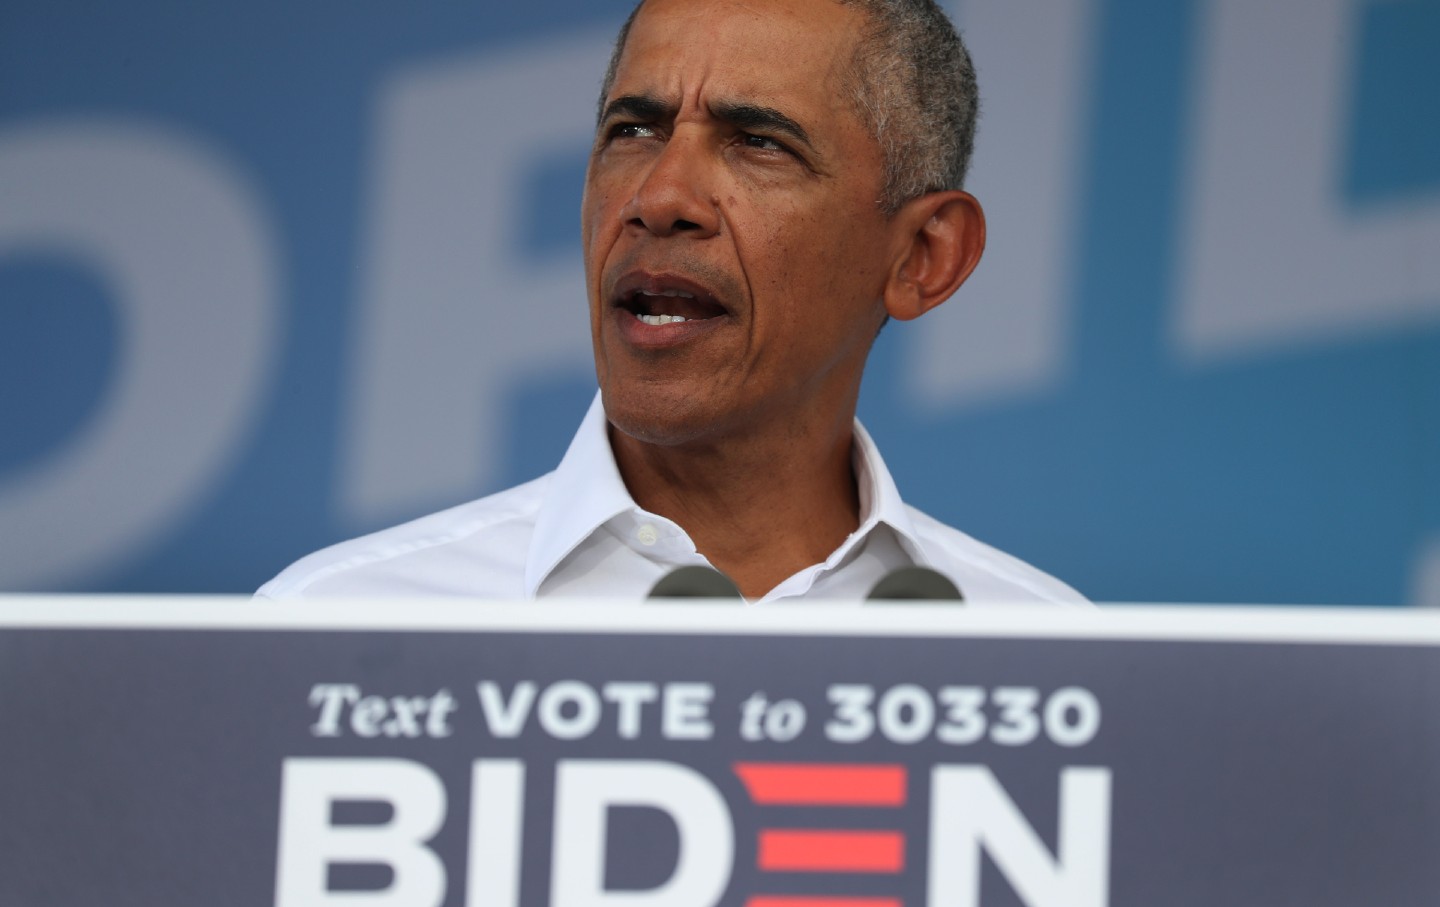 Barack Obama speaks to a crowd in front of a Biden 2020 sign